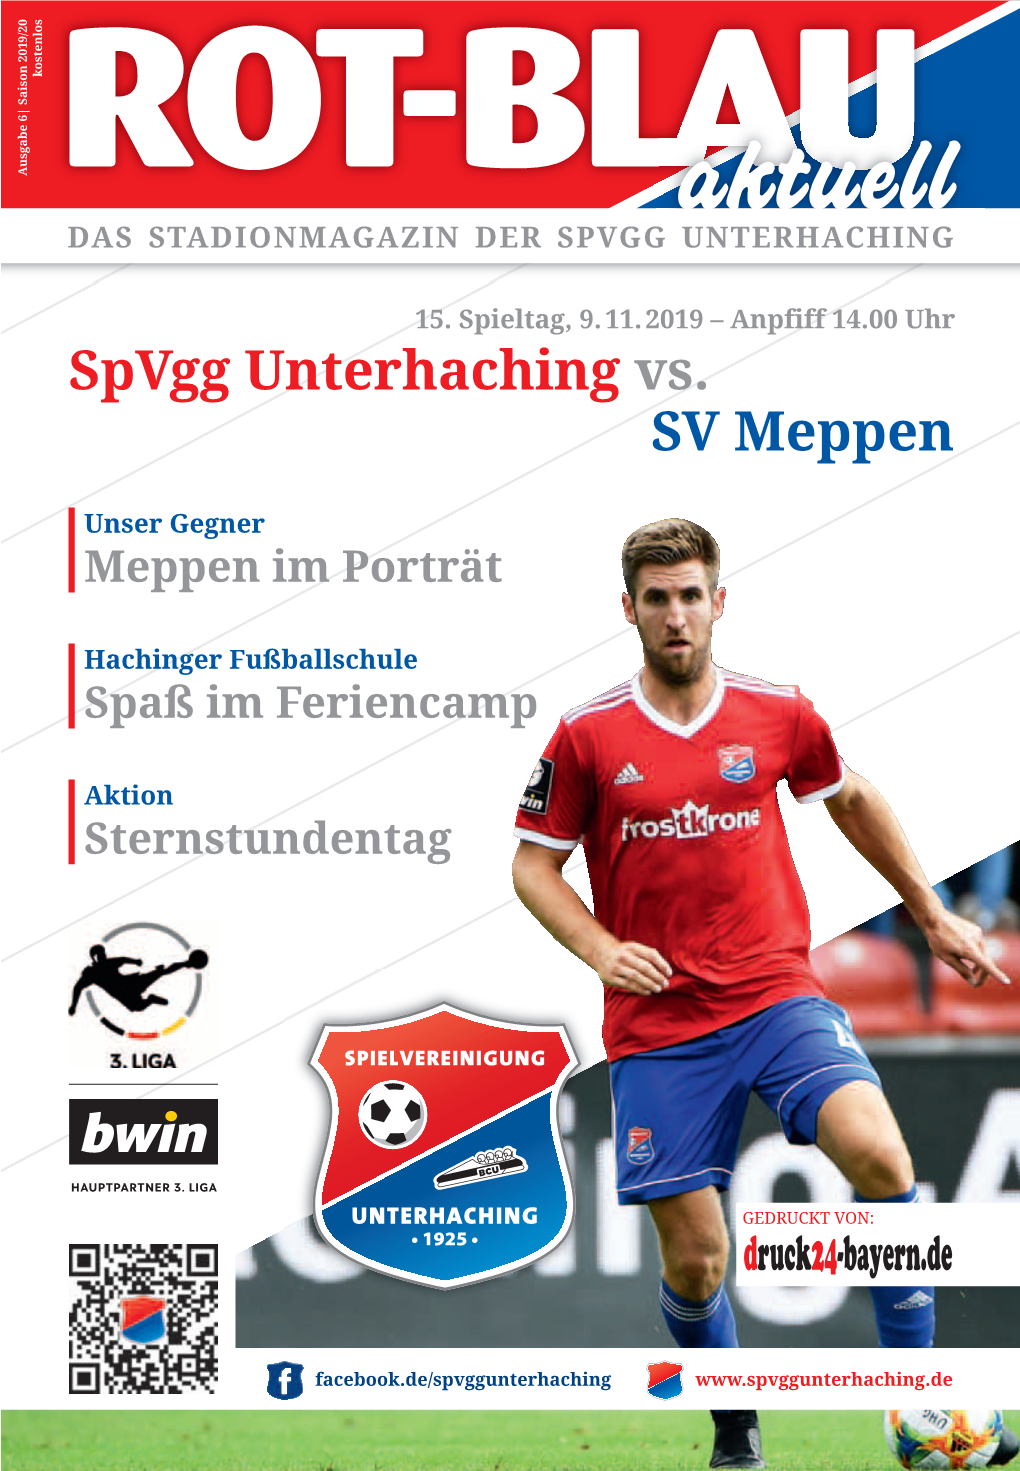 Spvgg Unterhaching Stadionmagazin 2019/2020 Nr. 06.Qxp